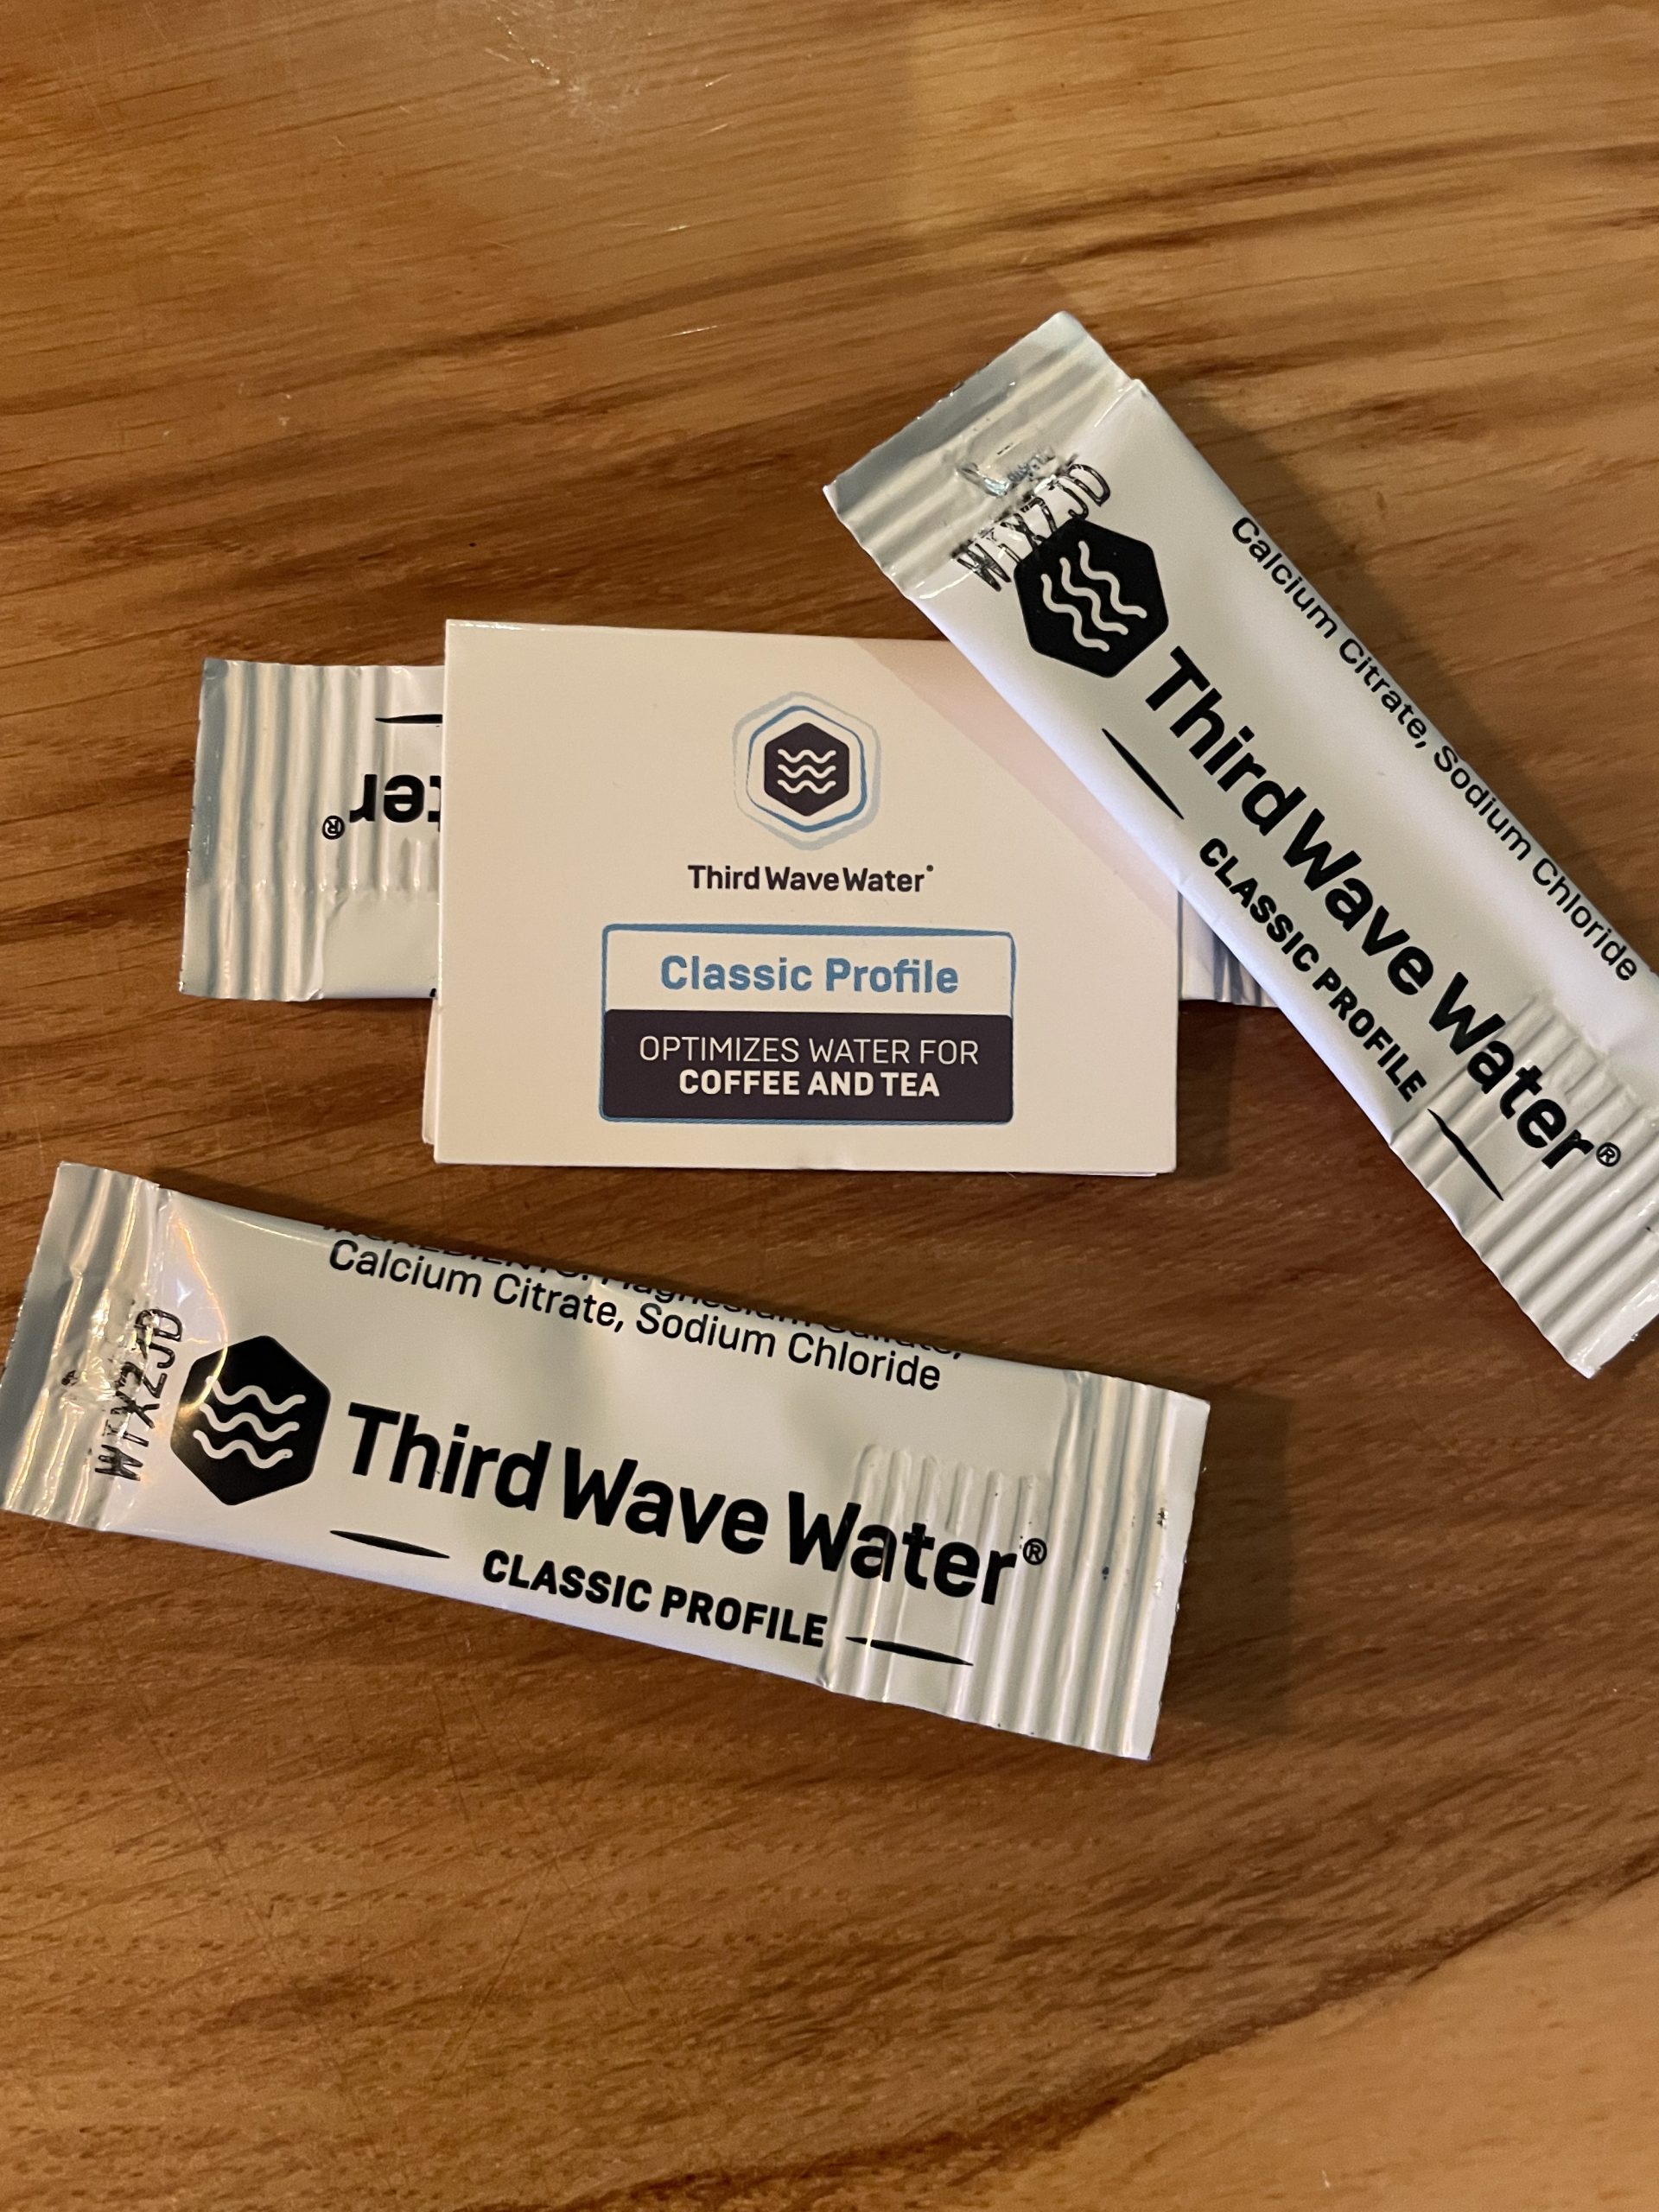 Third Wave Water: Better Water Better Coffee